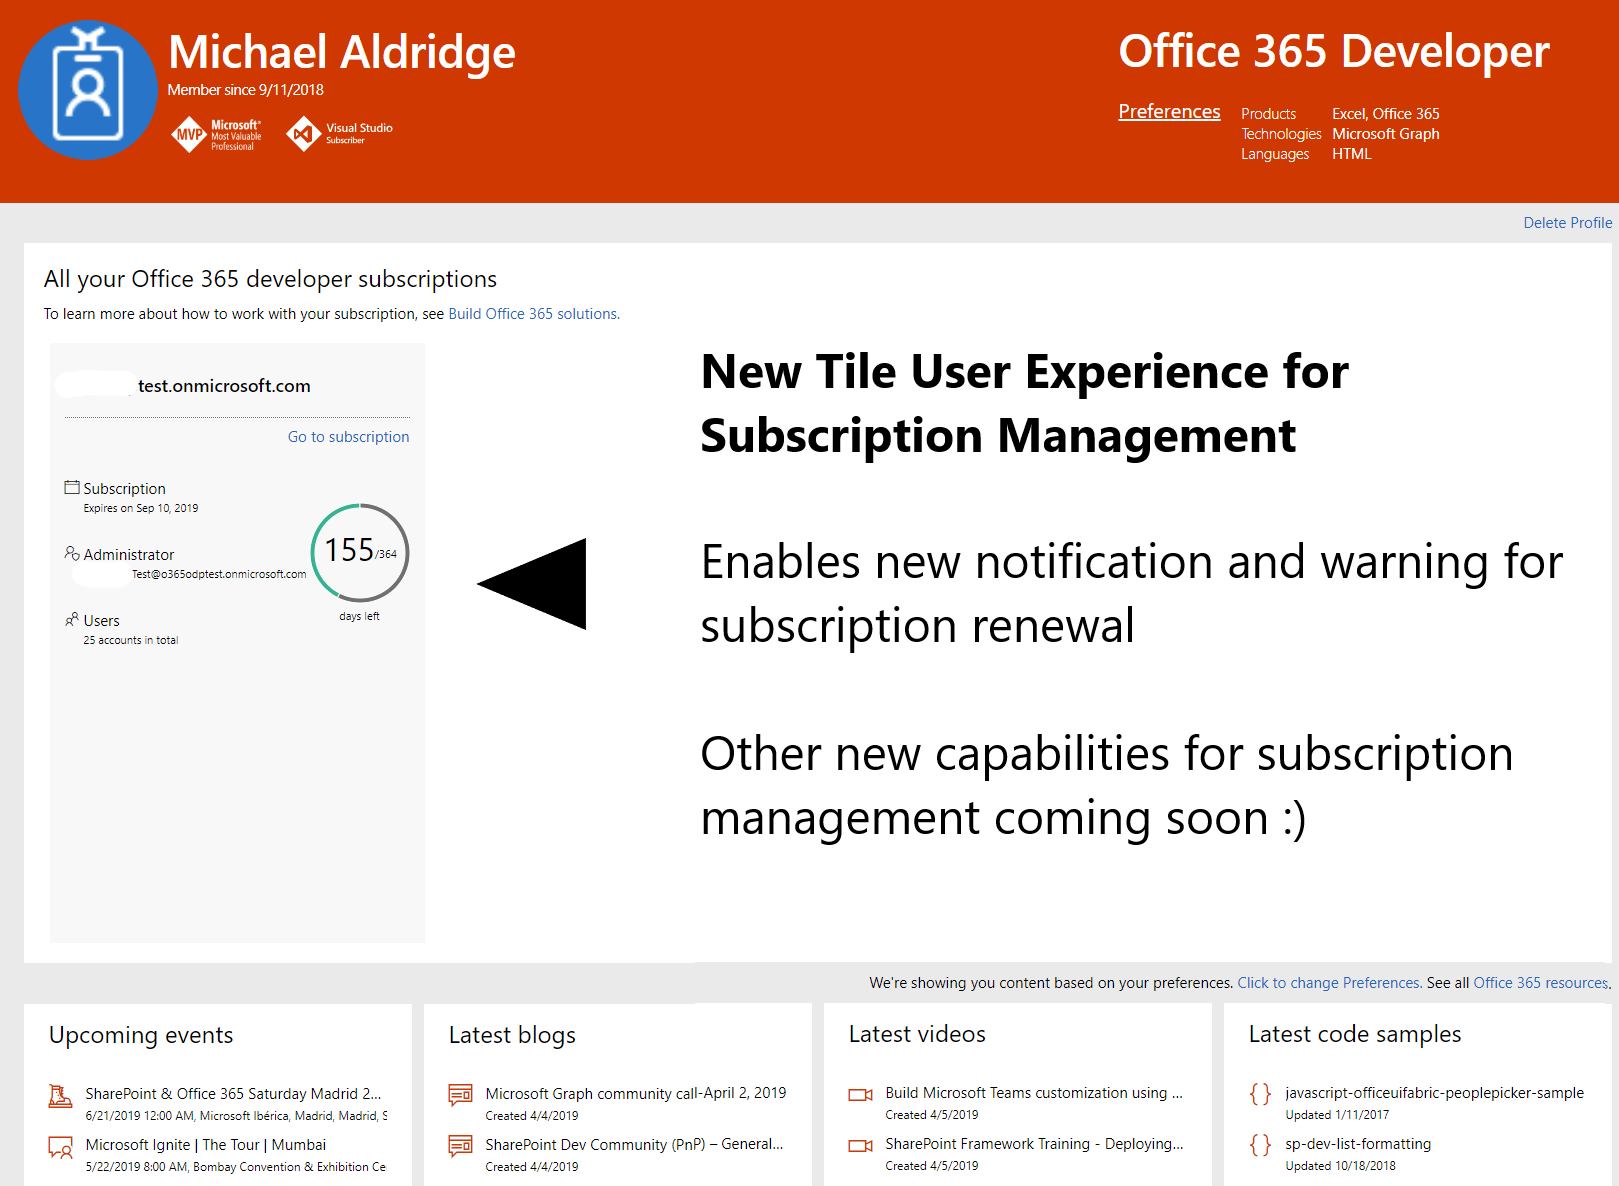 New renewable Office 365 developer subscriptions launch on April 3rd -  Microsoft 365 Developer Blog